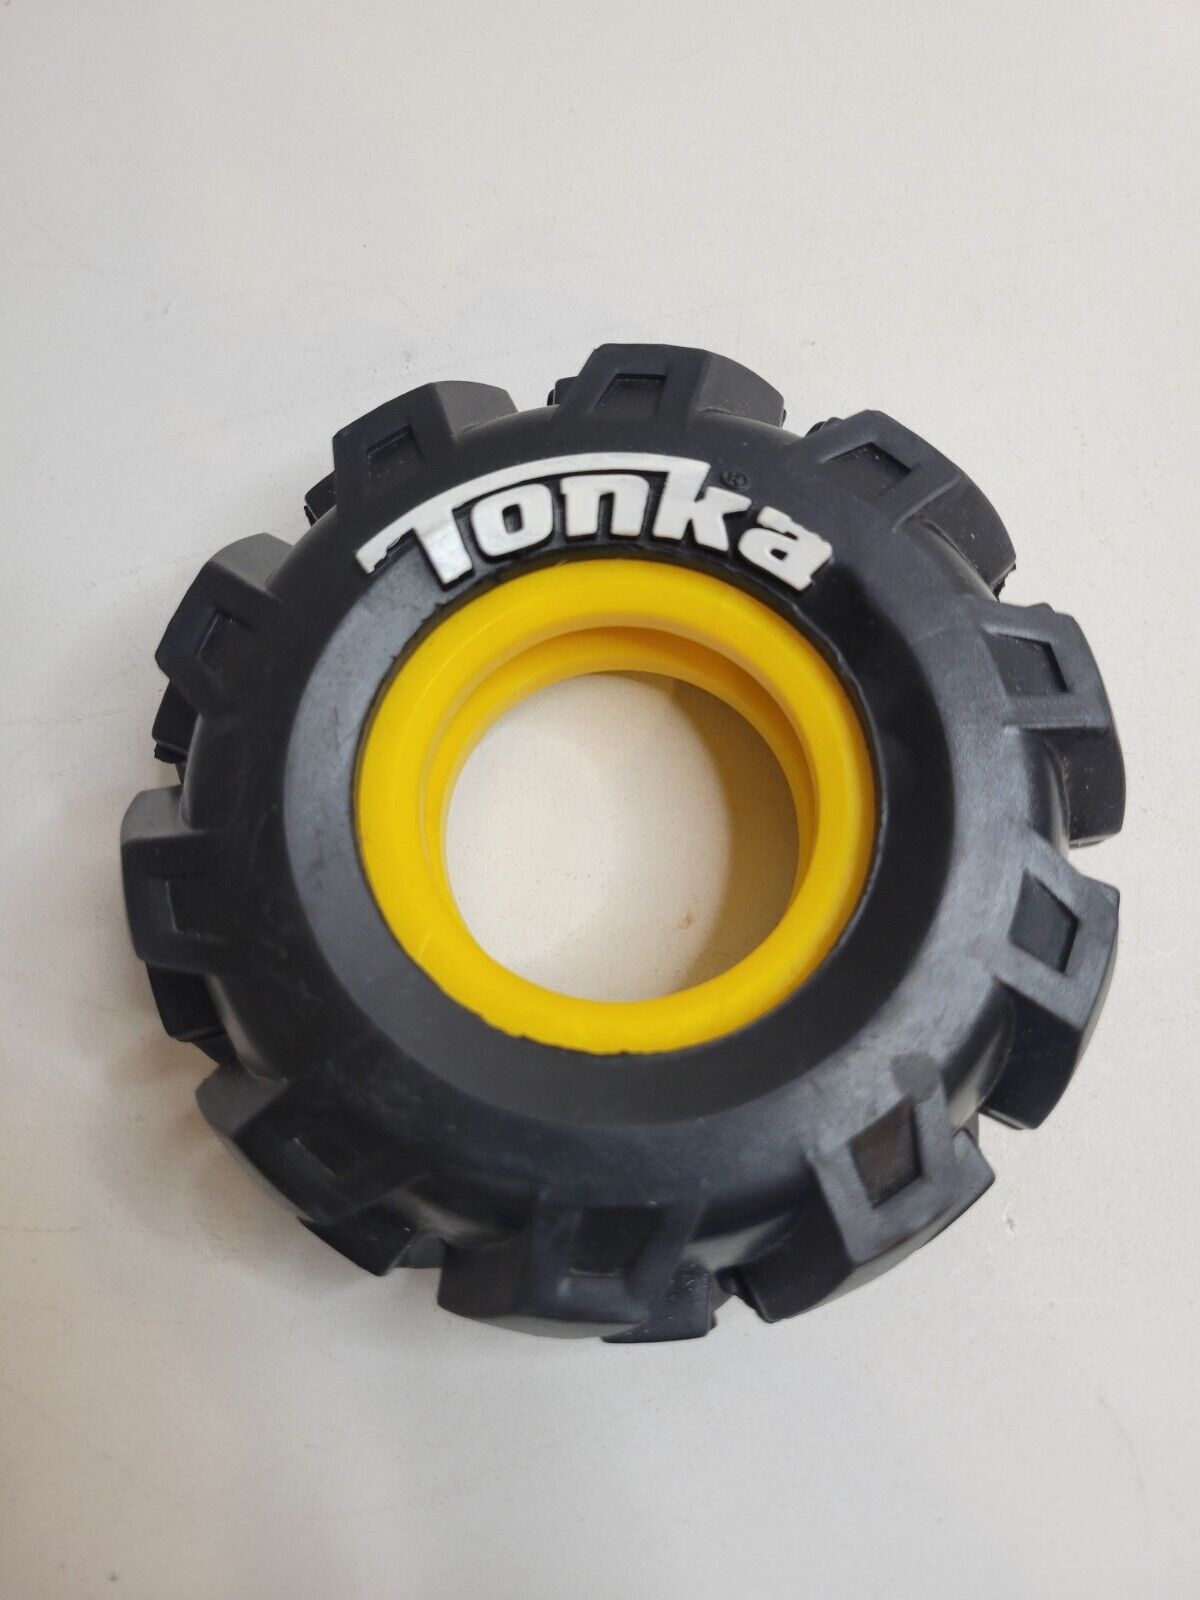 Tonka Tire Desk Paperweight  Rubber Tire 2019 HASBRO